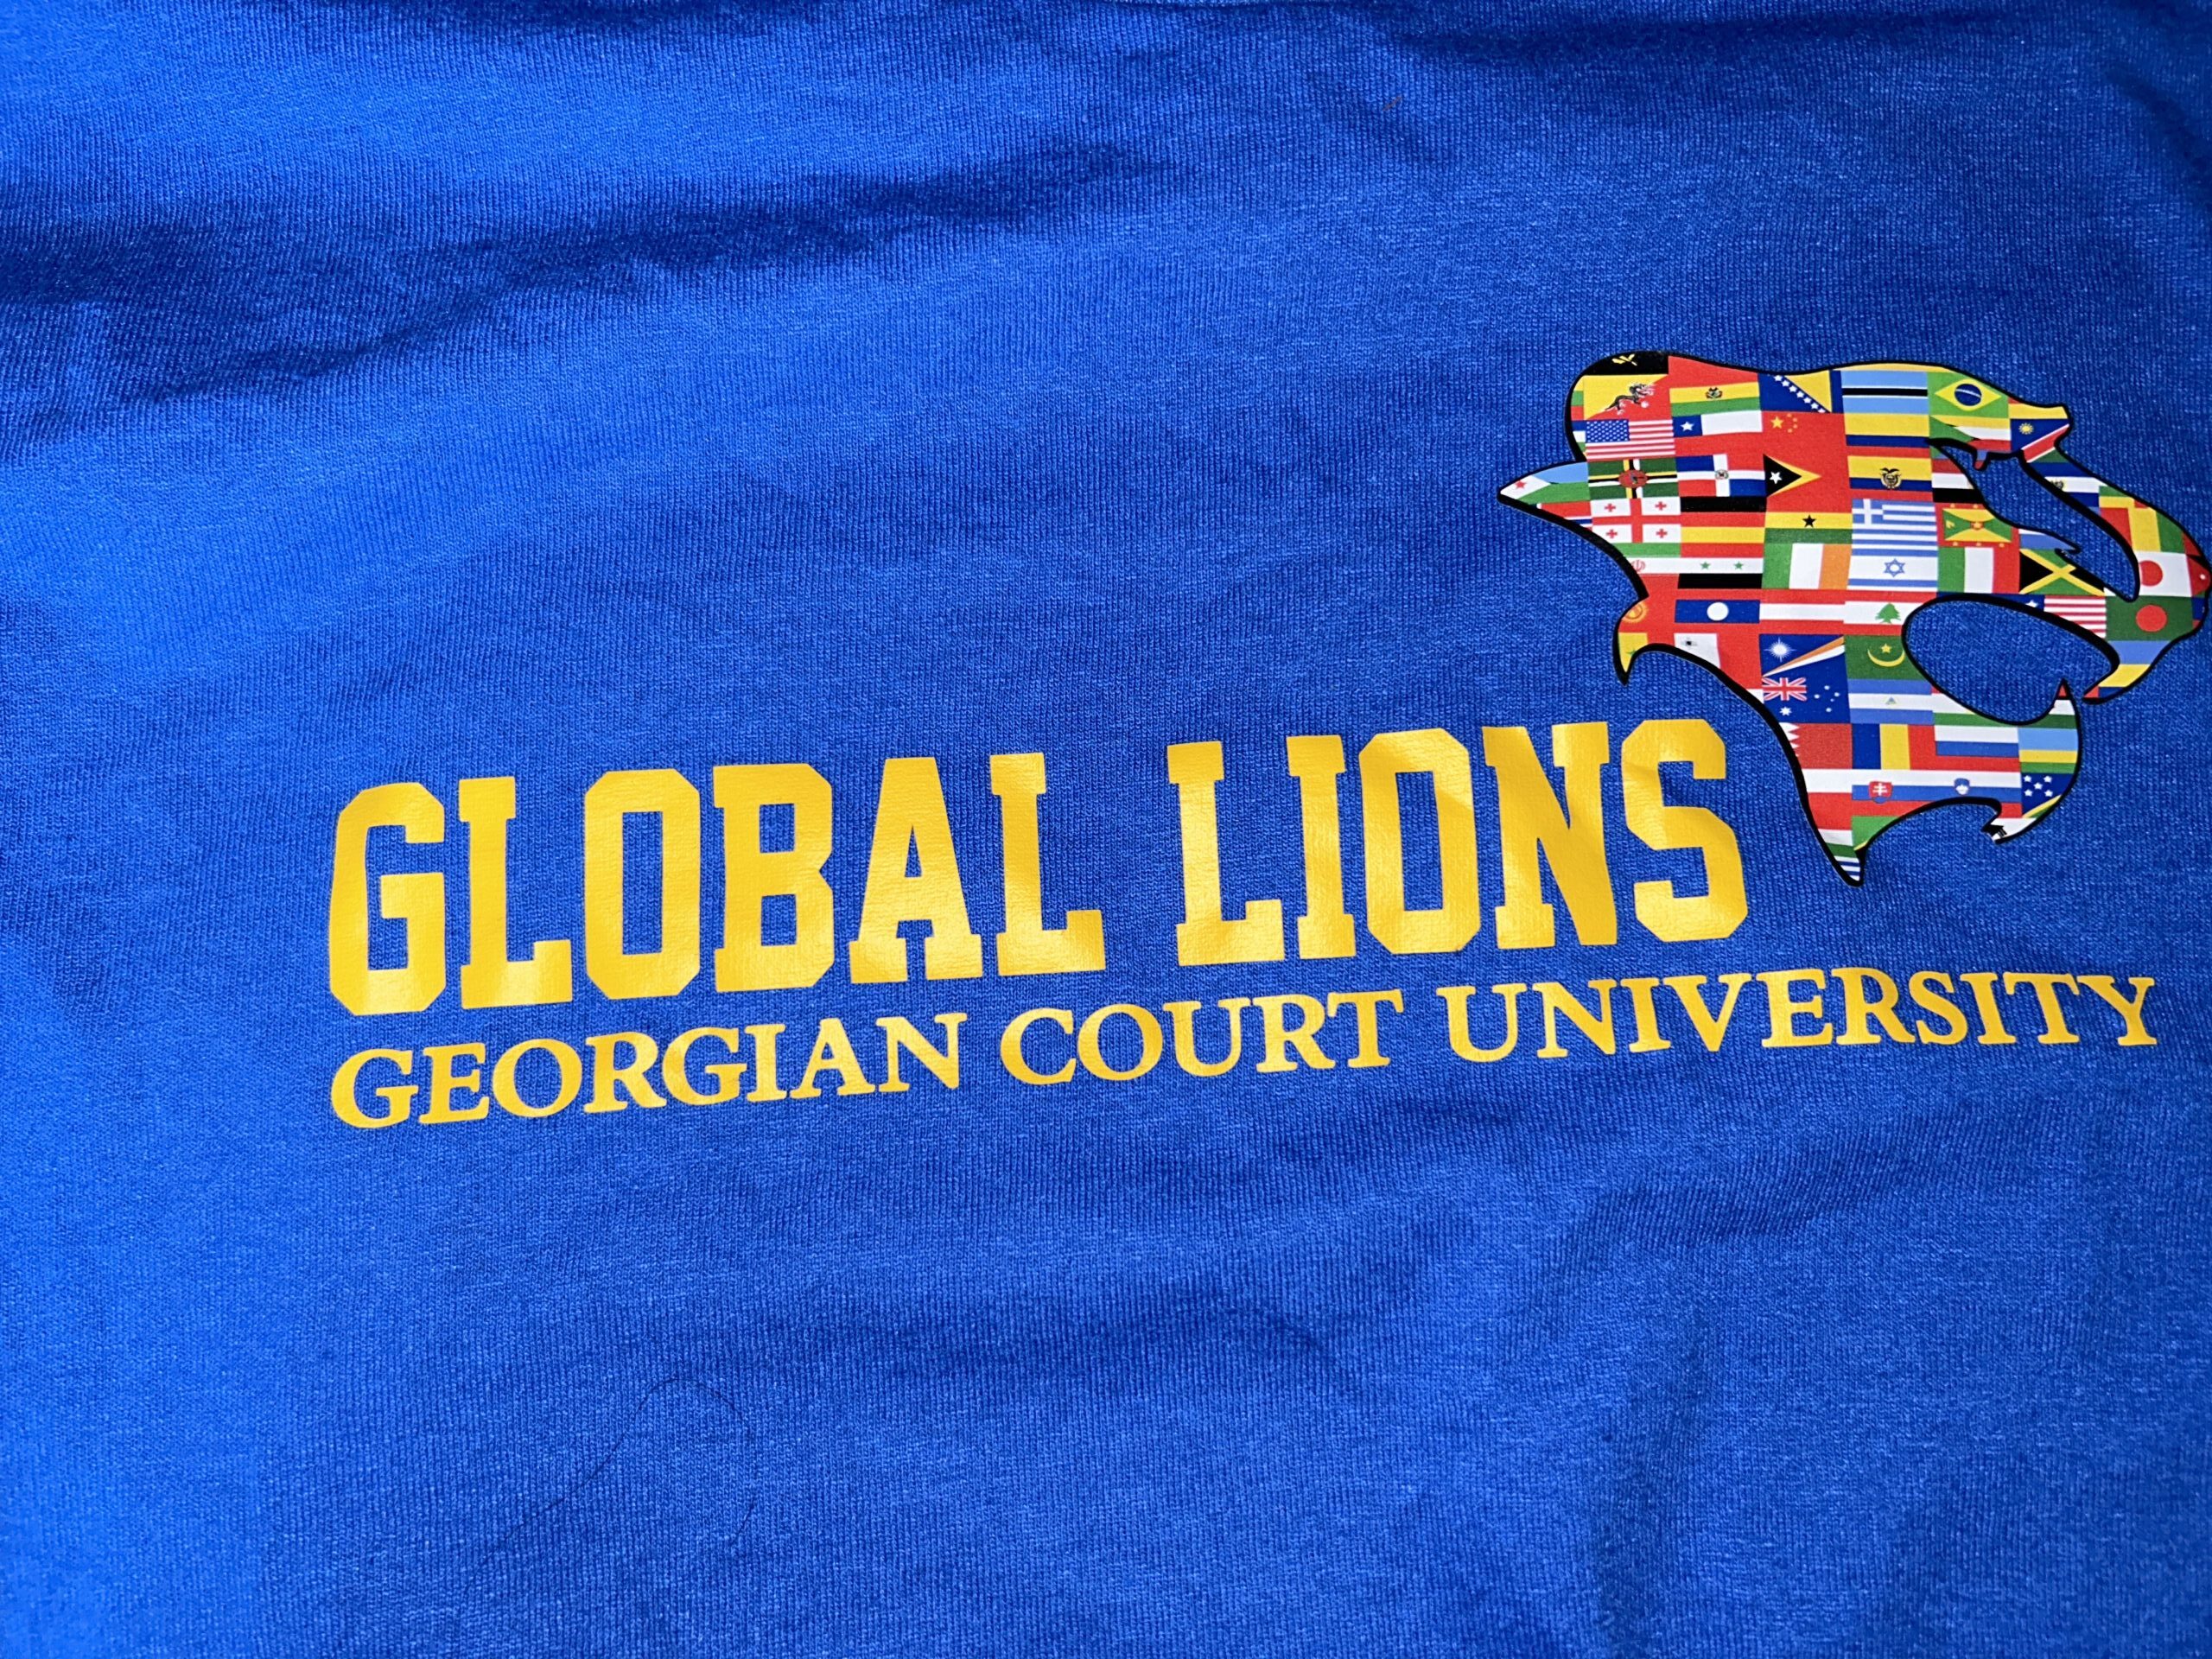 A photo of GCU’s Global Lions logo on a T-Shirt.